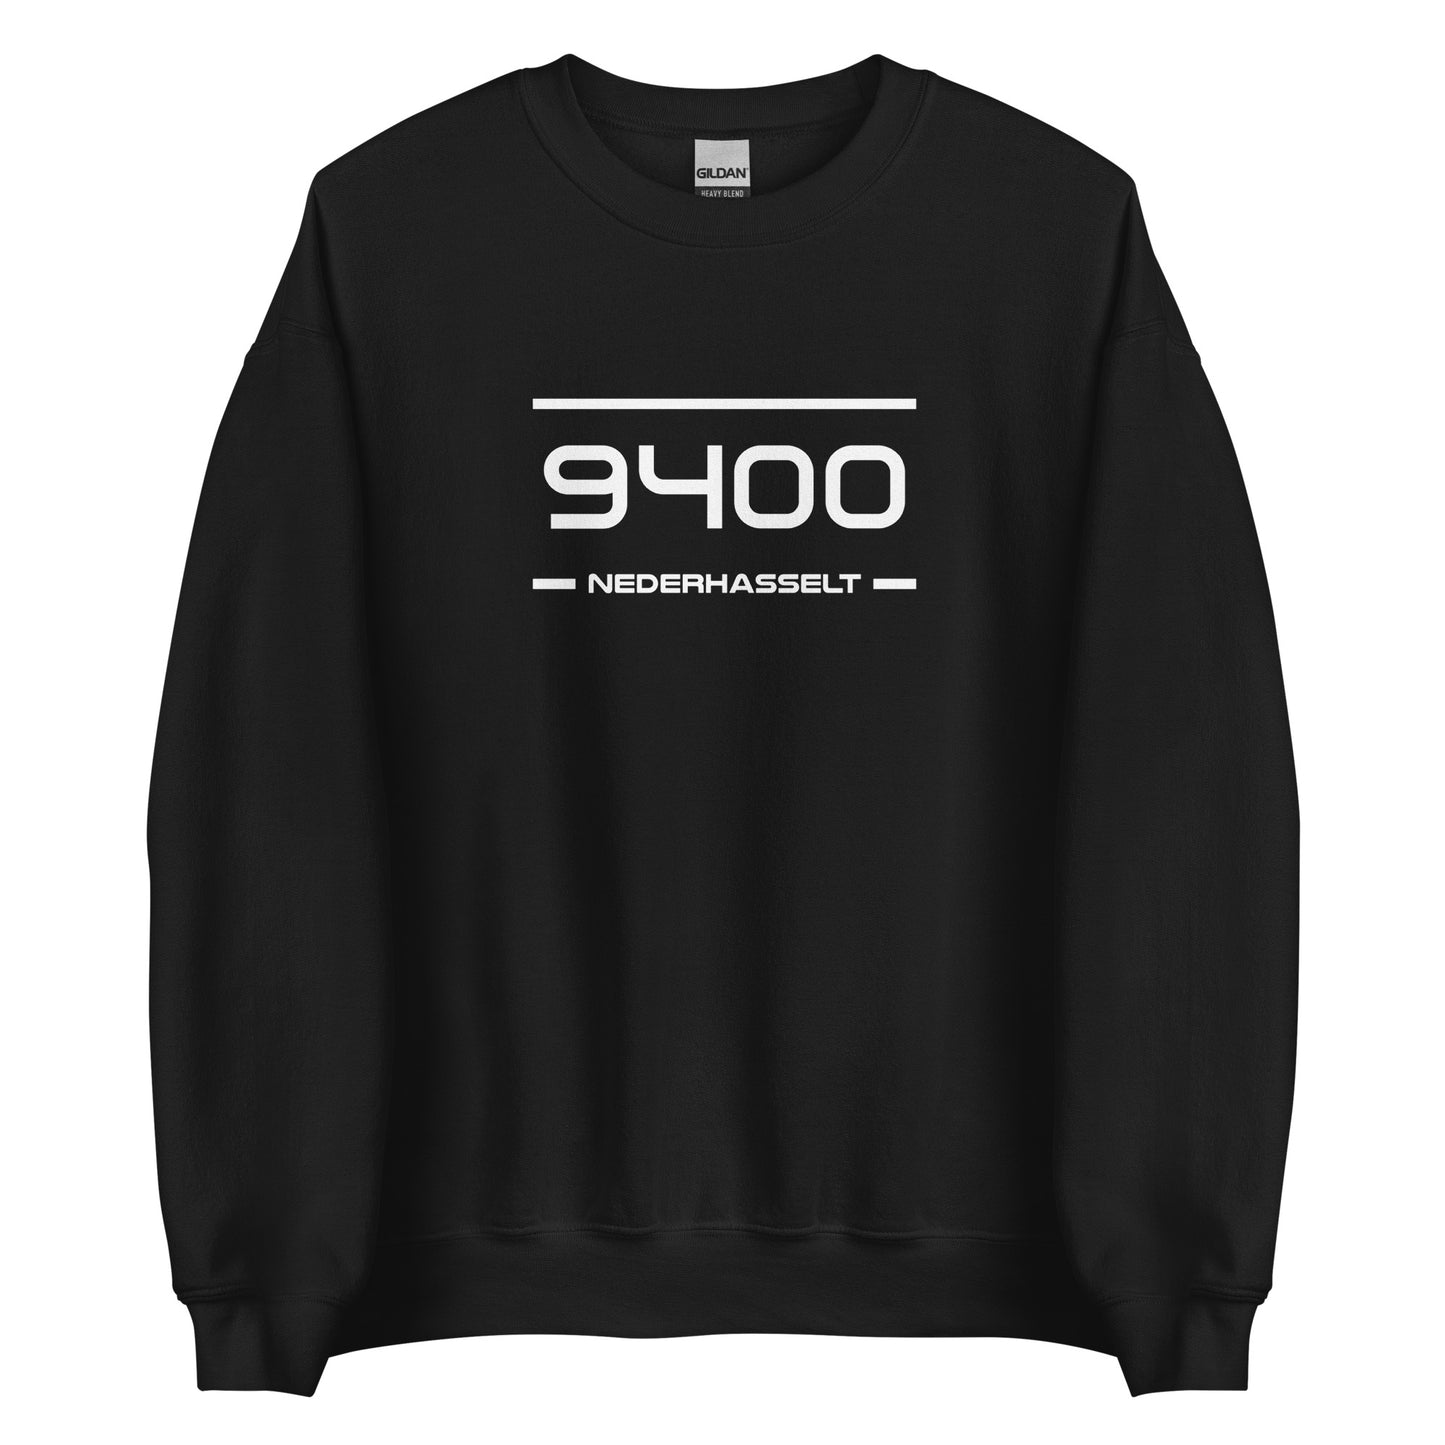 Sweater - 9400 - Nederhasselt (M/V)